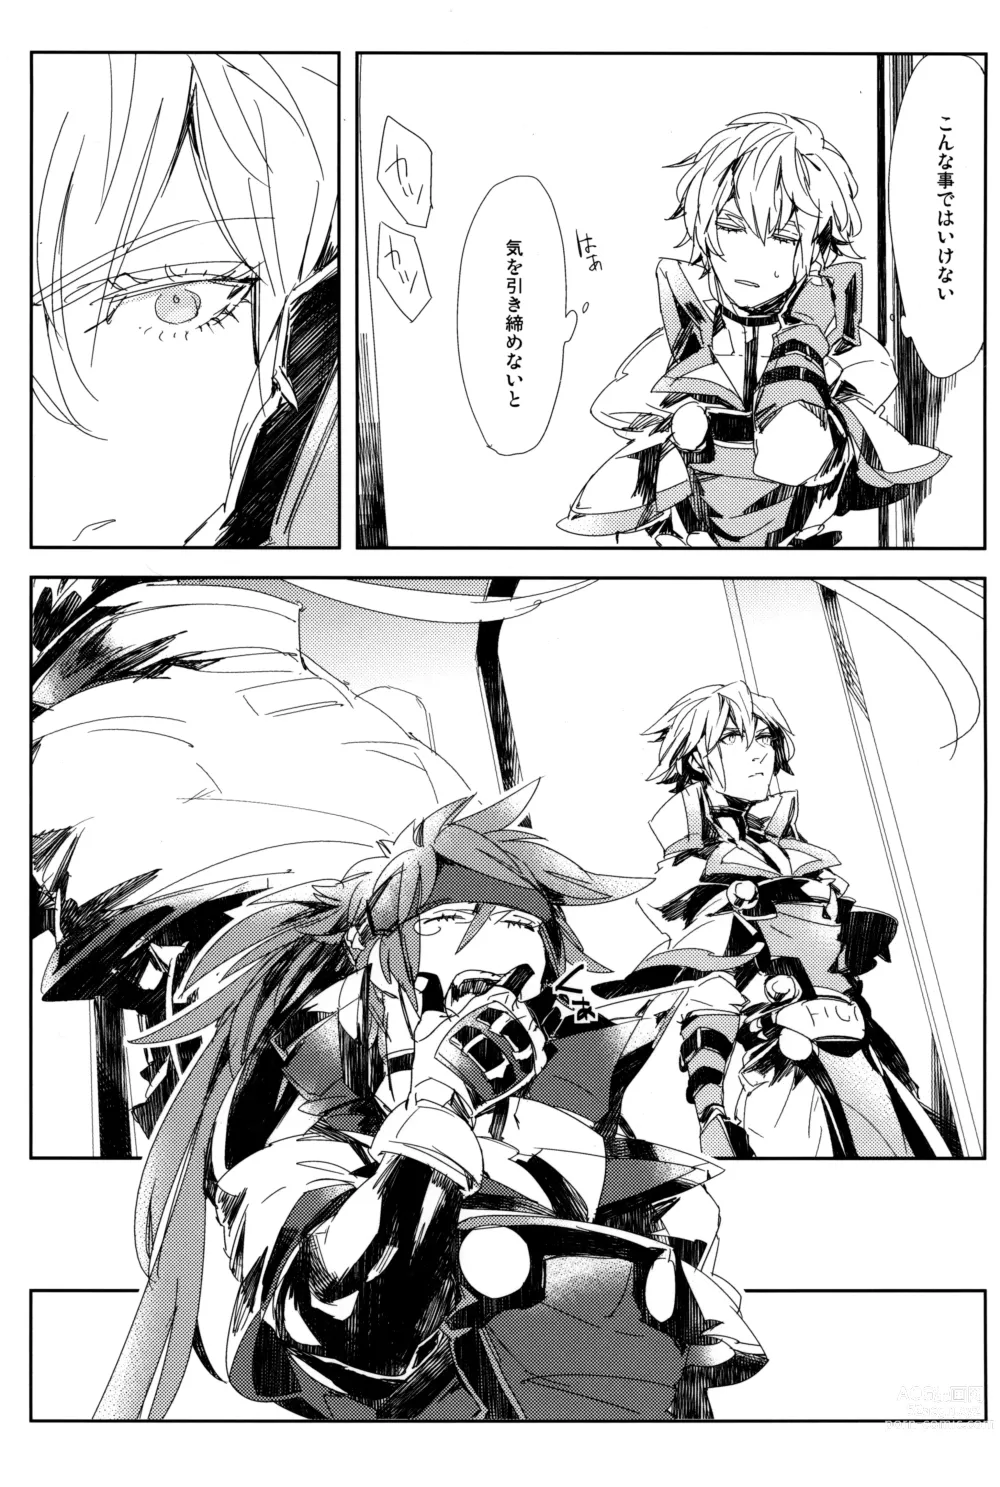 Page 21 of doujinshi Perversion